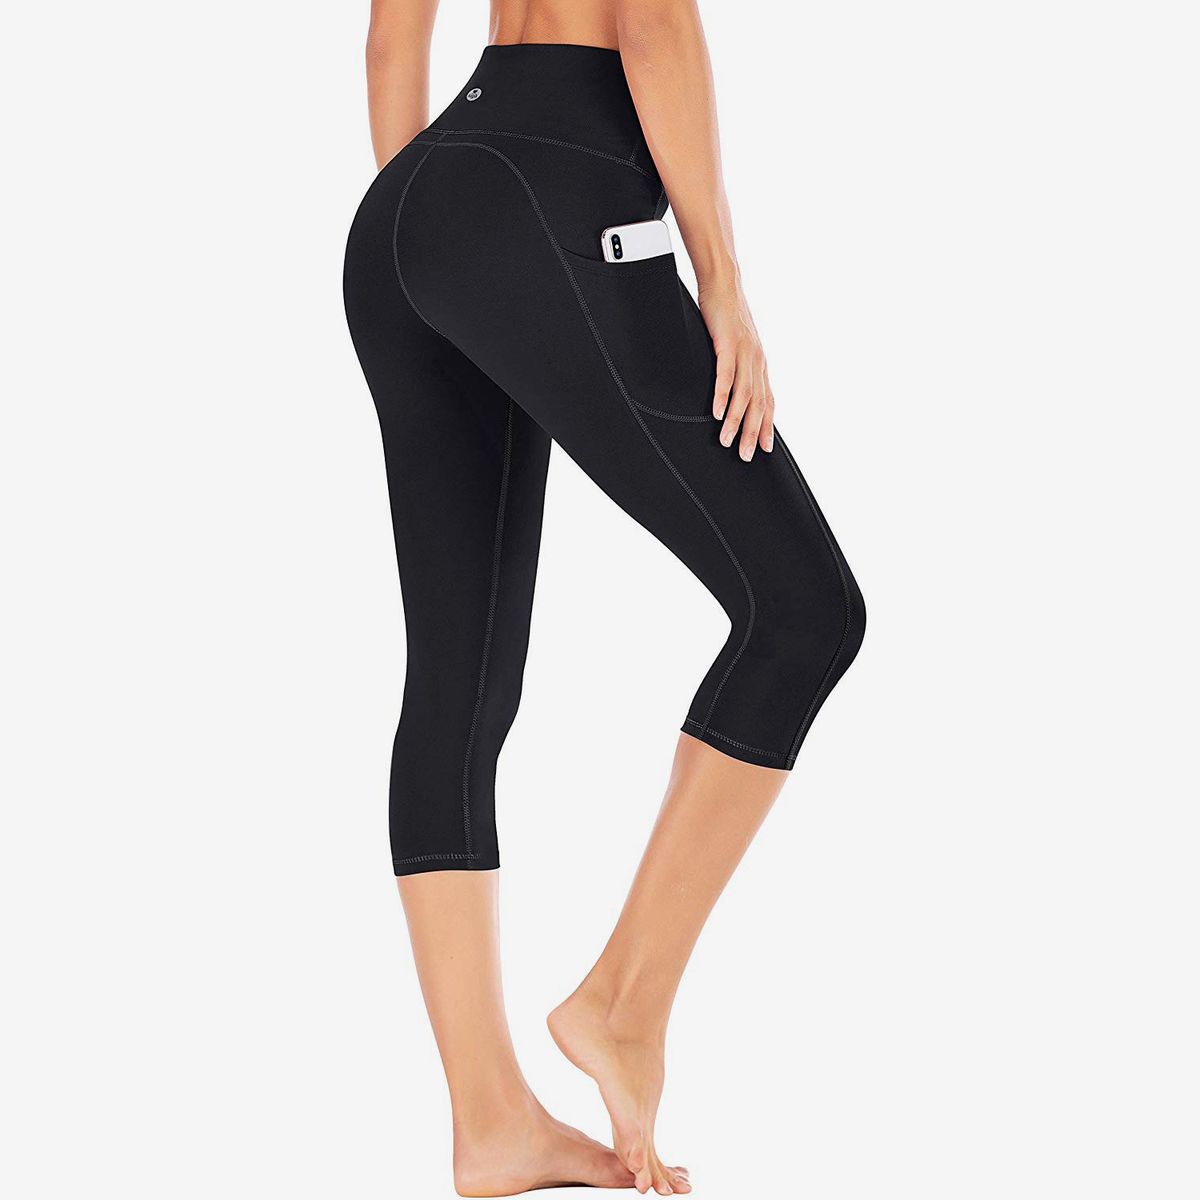 Kyopp High Waist Yoga Pants Tummy Control Workout Running 4 Way Stretch Yoga Leggings Women Capris Pants